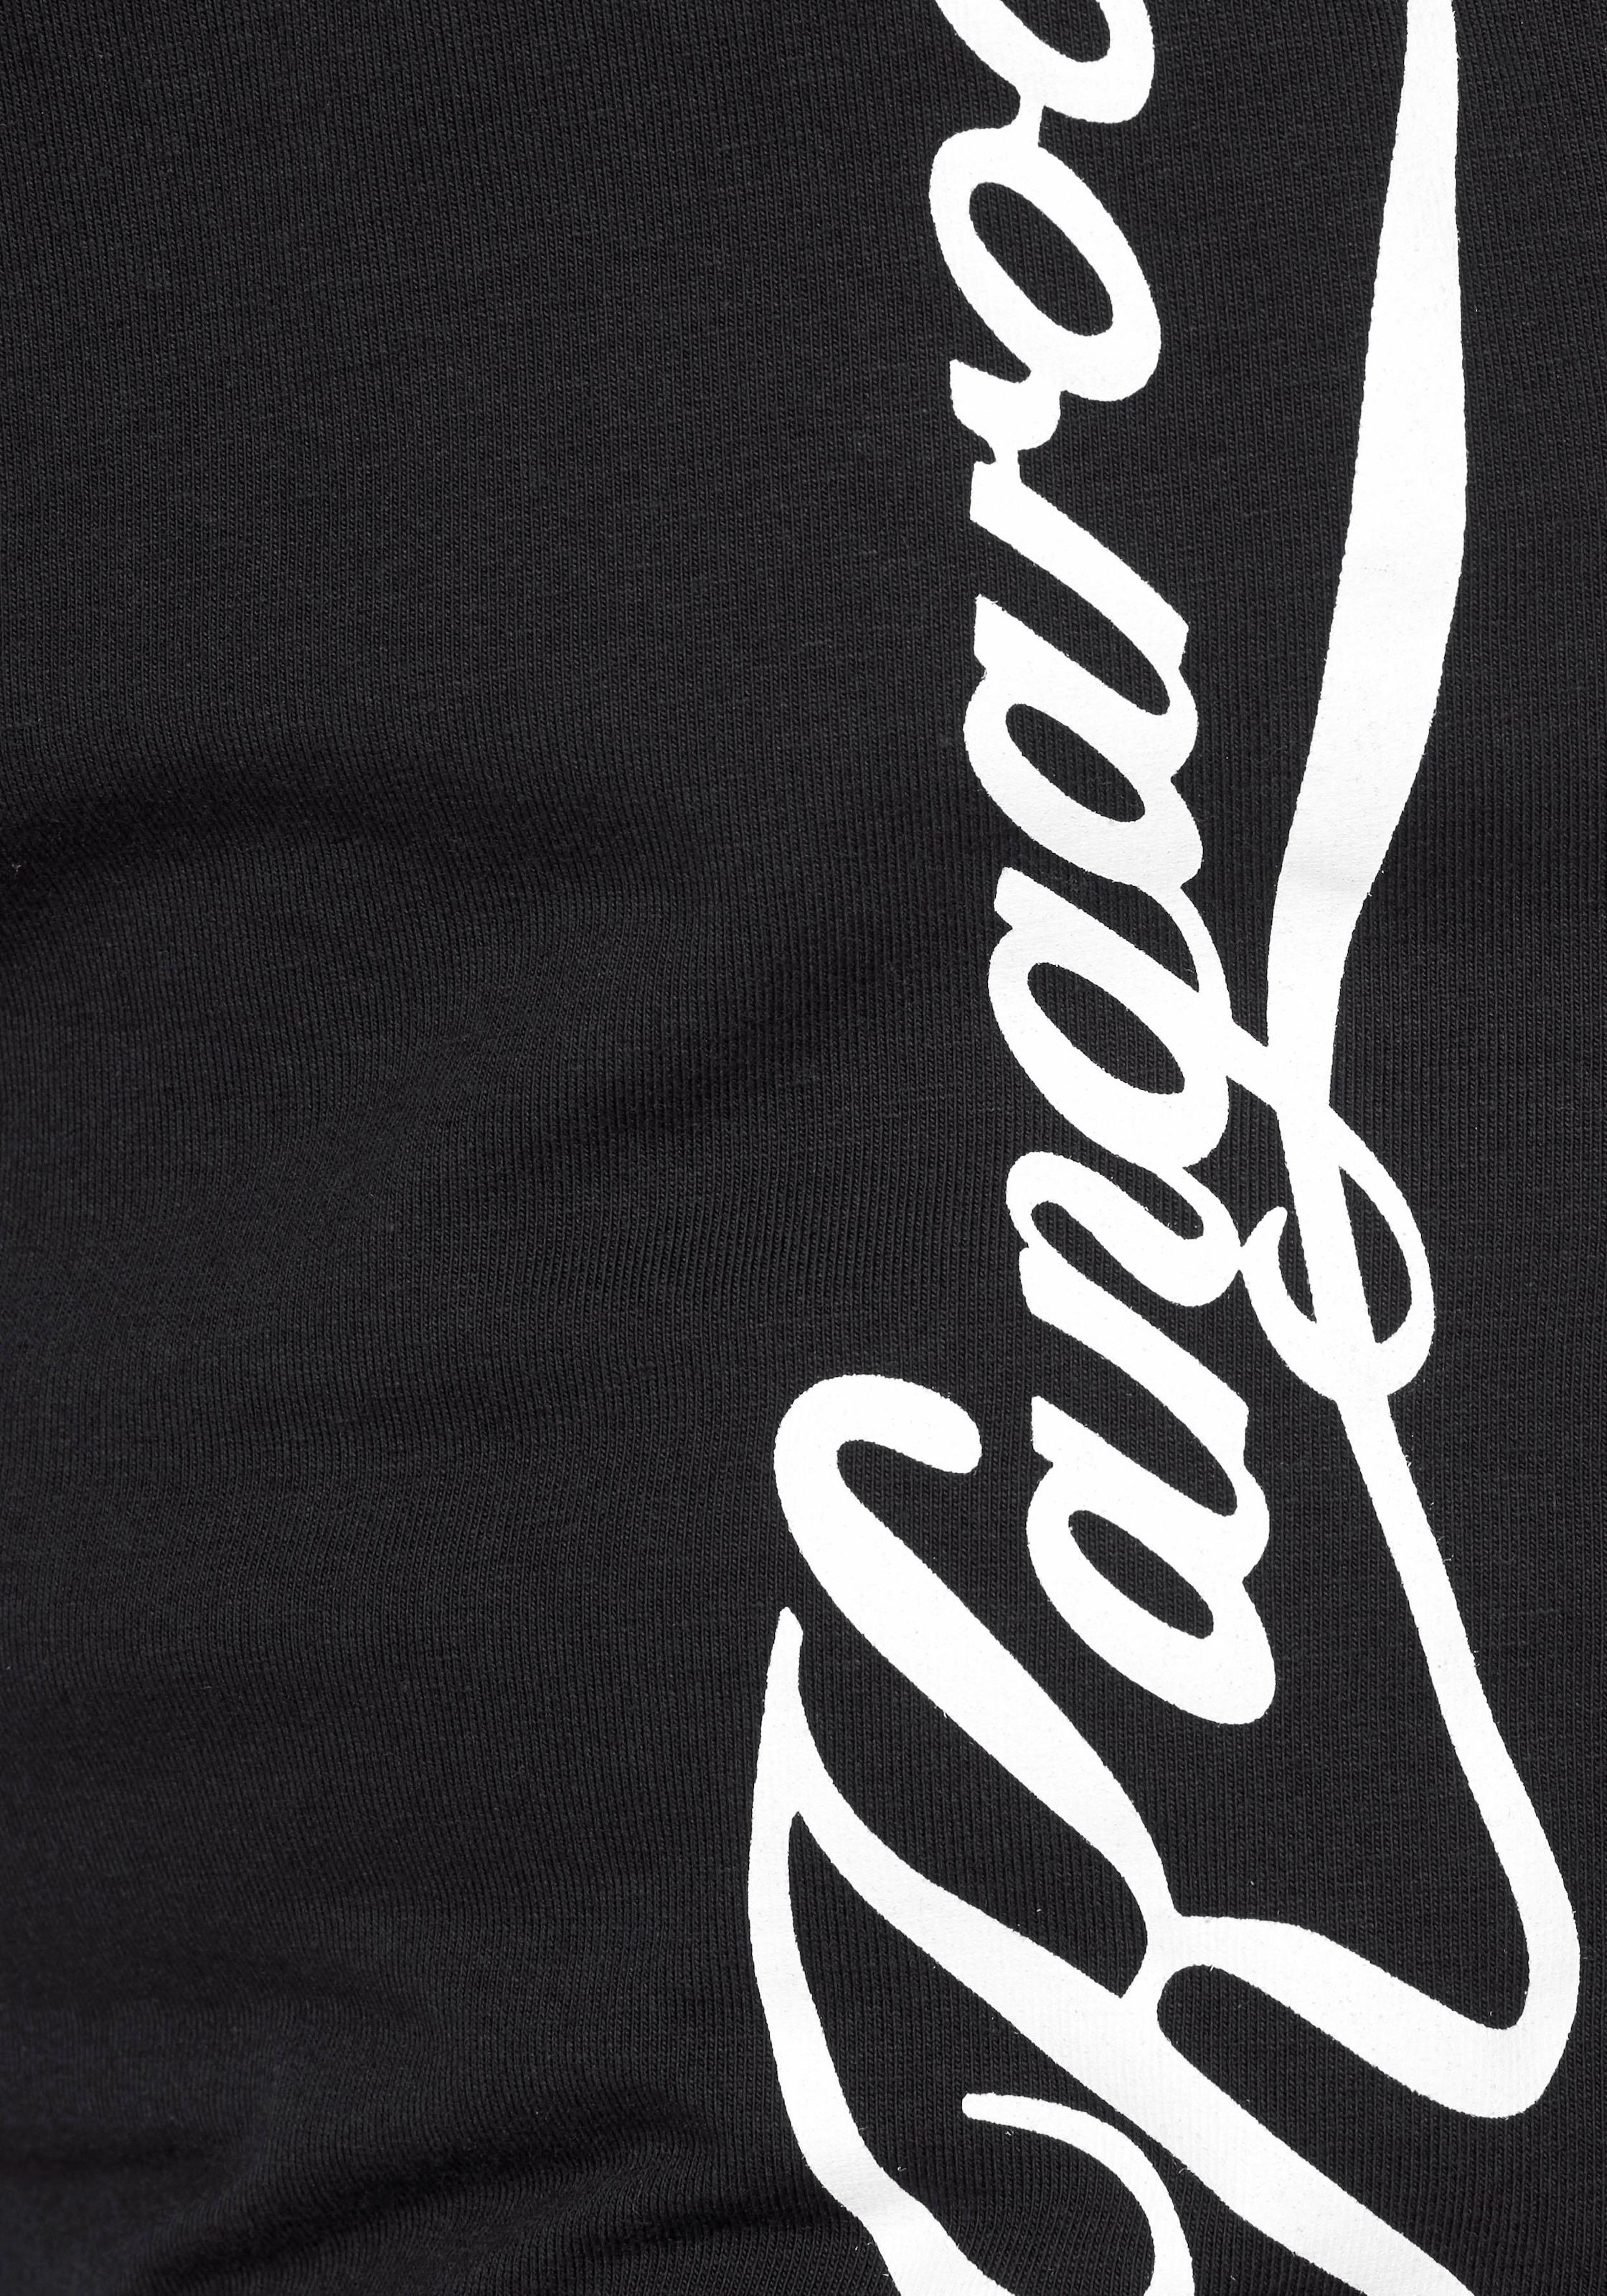 KangaROOS T-Shirt, Größen Große bestellen online